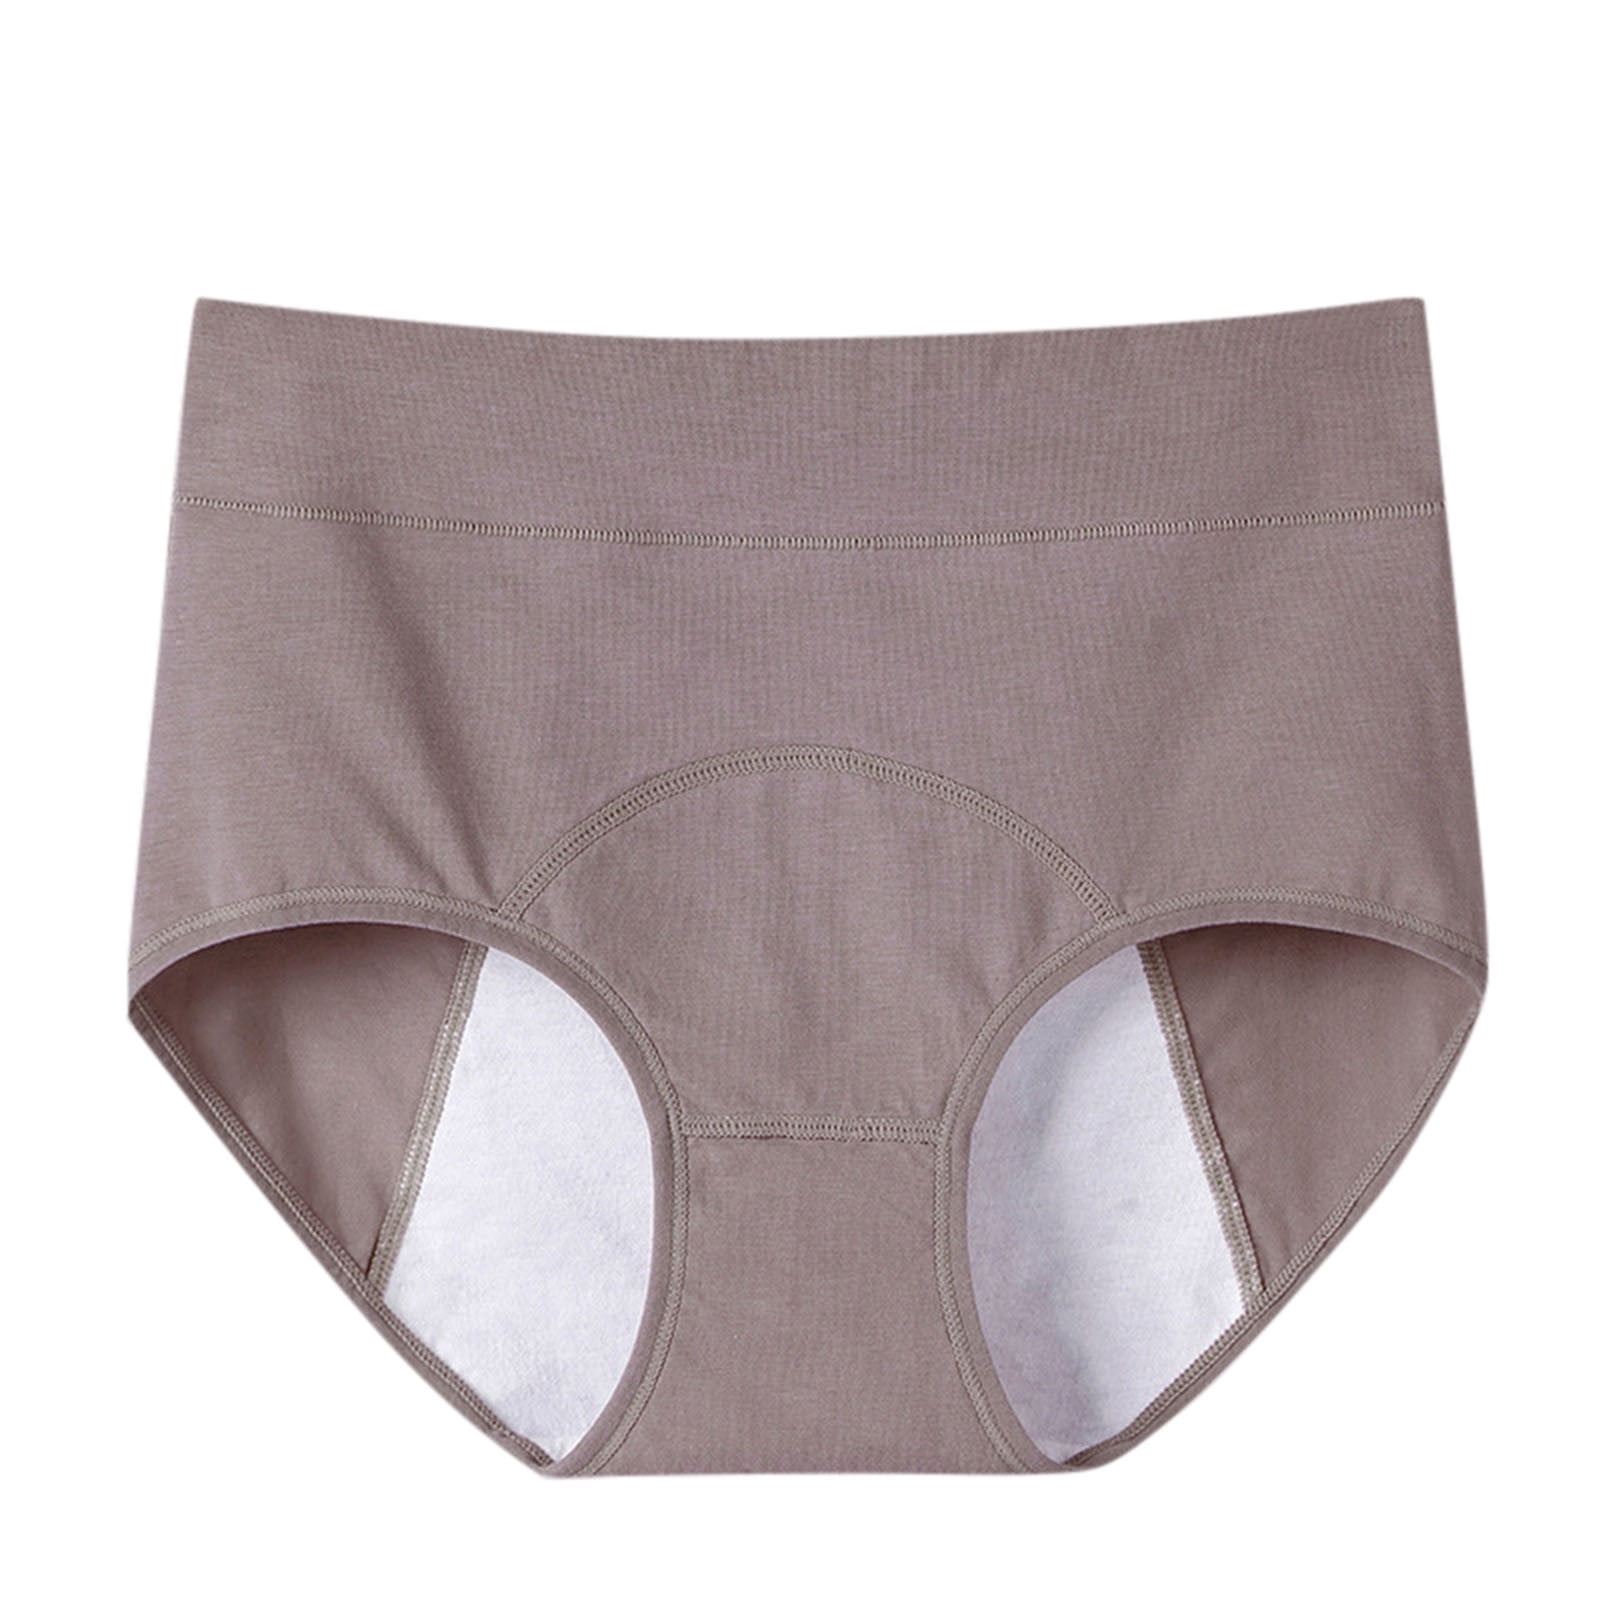 Efsteb High Waisted Underwear for Women Breathable Lingerie